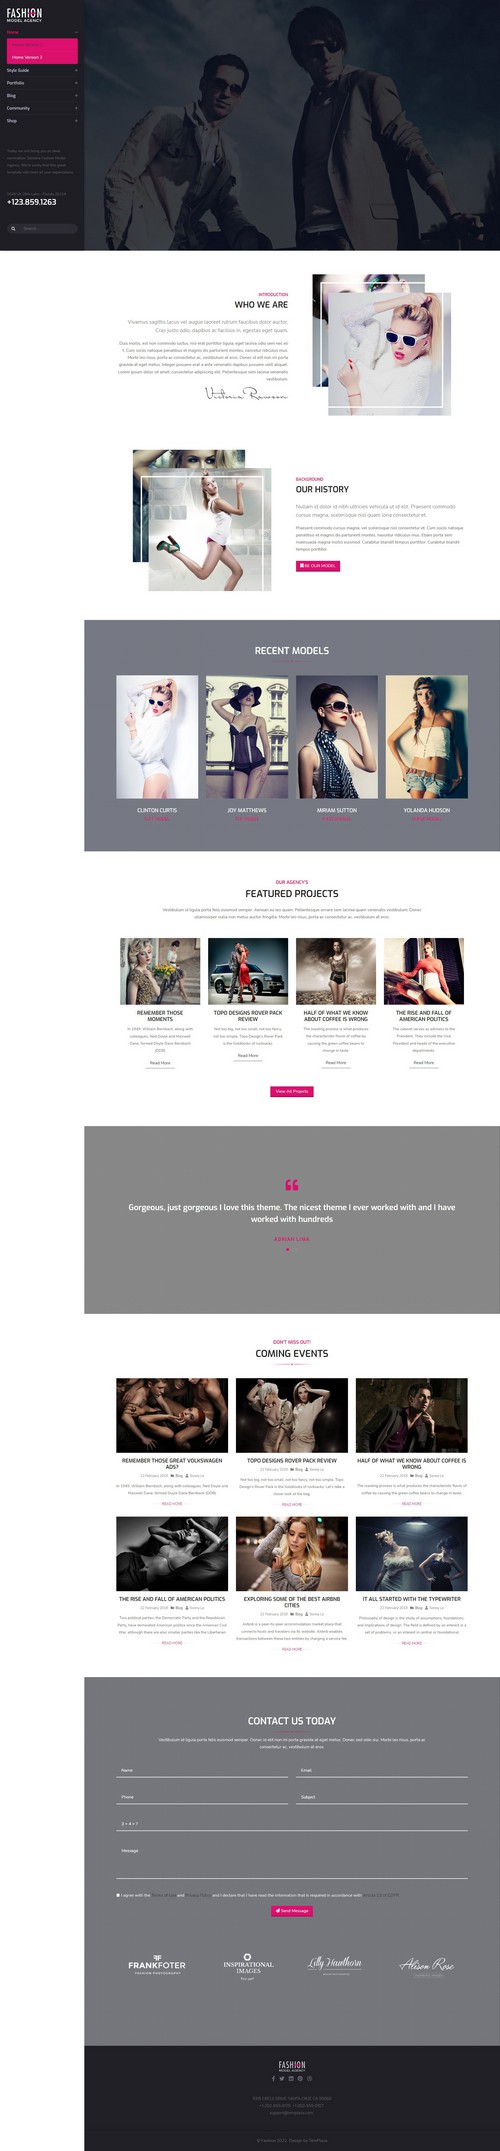 Fashion - Creative and Models Agency Joomla Template